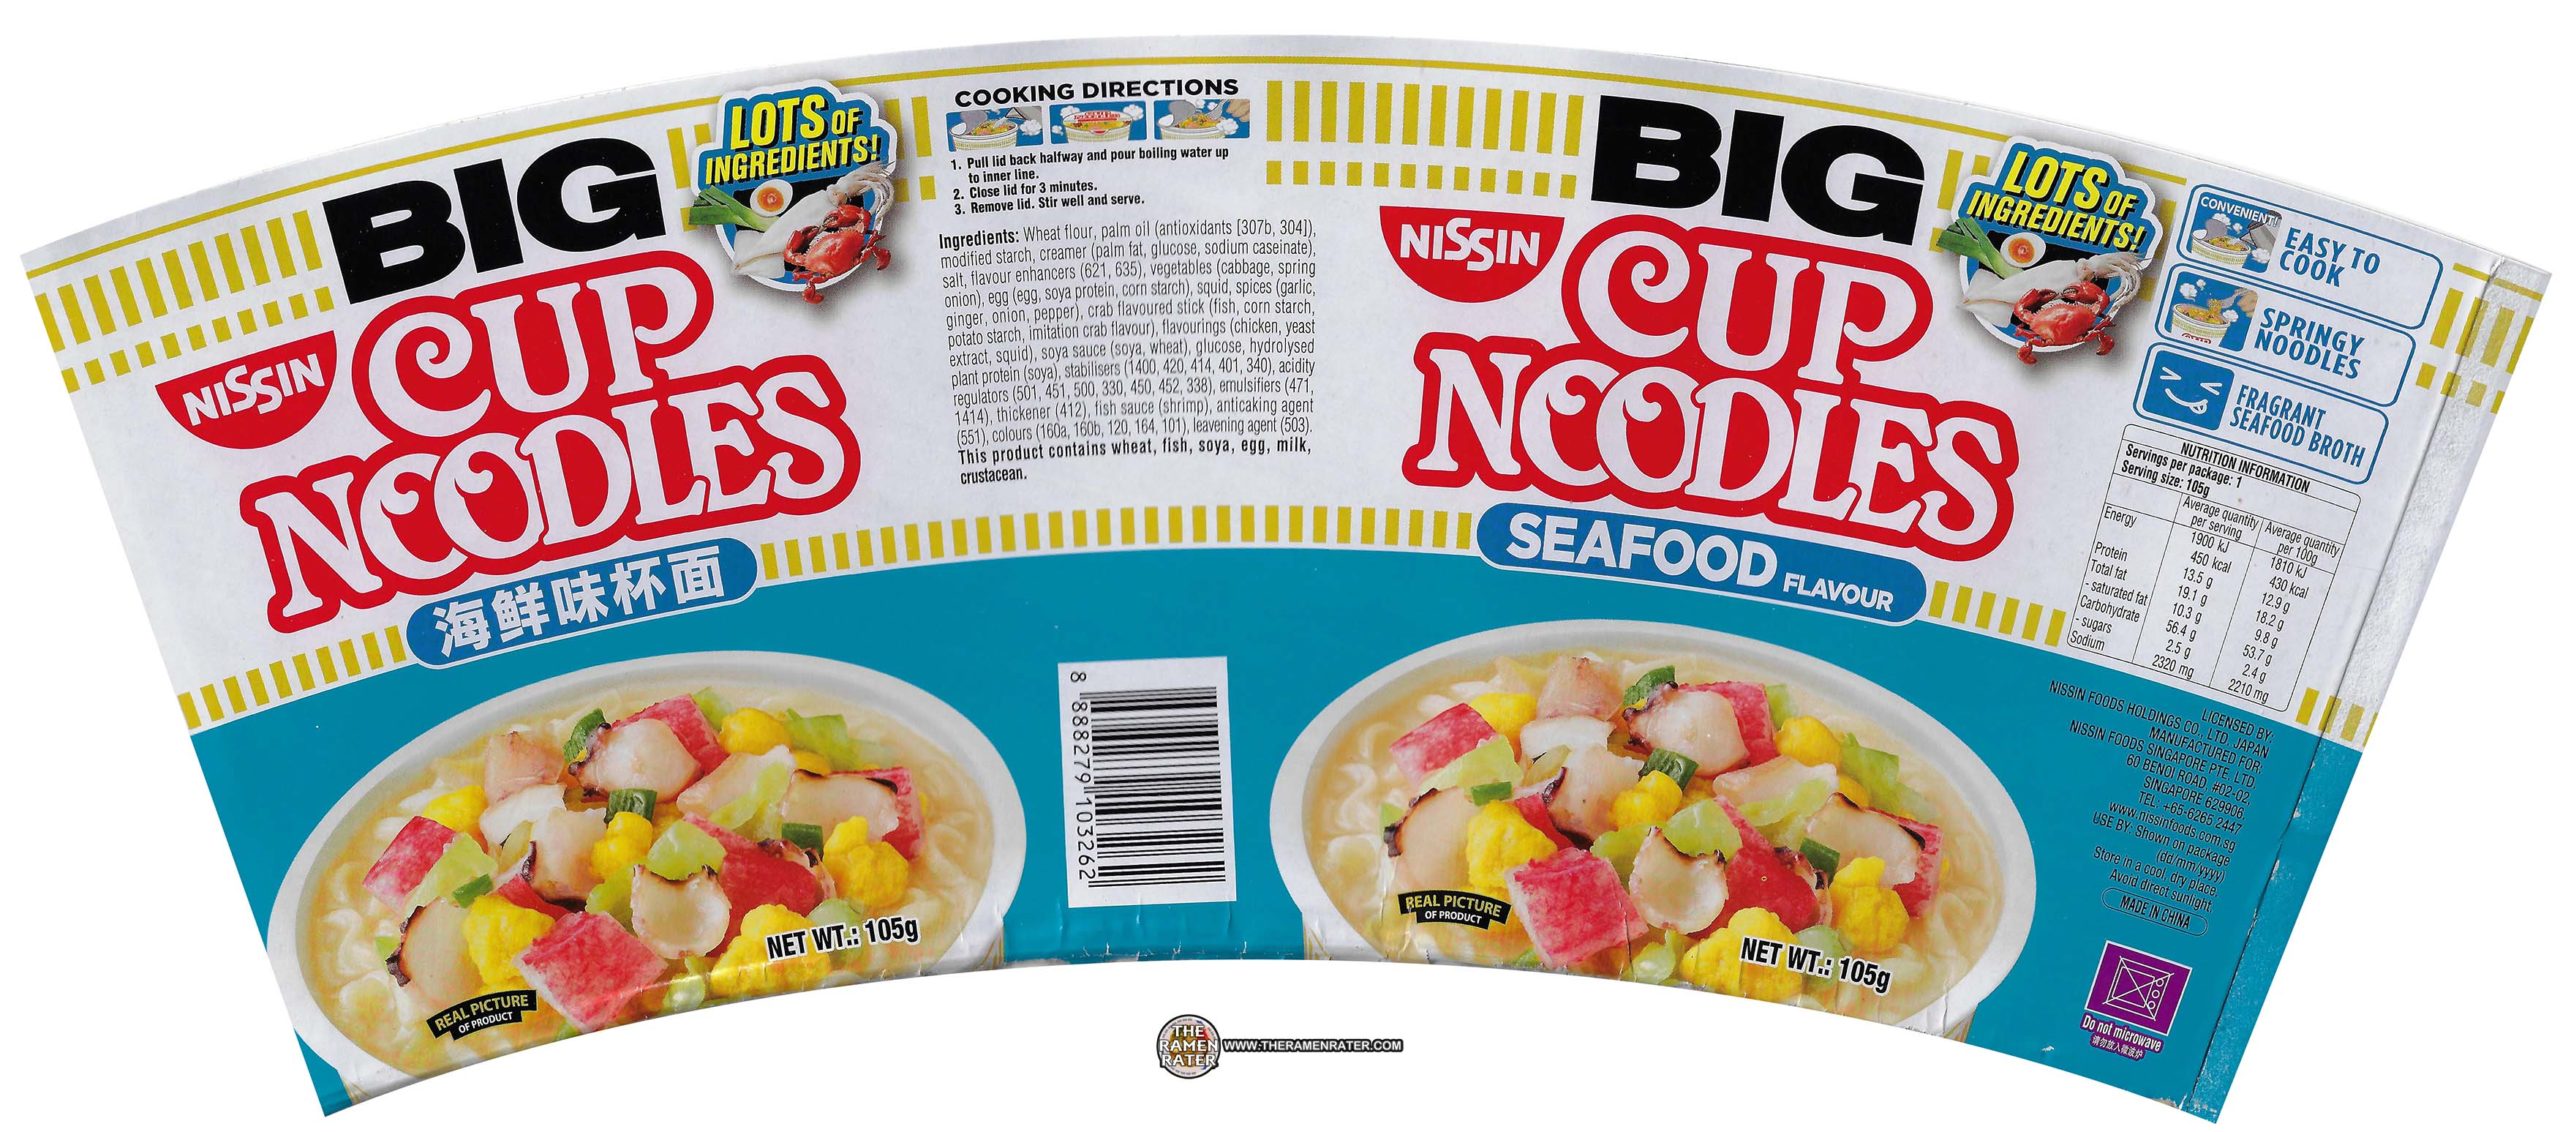 #4554: Nissin BIG Cup Noodles Seafood Flavour - Singapore